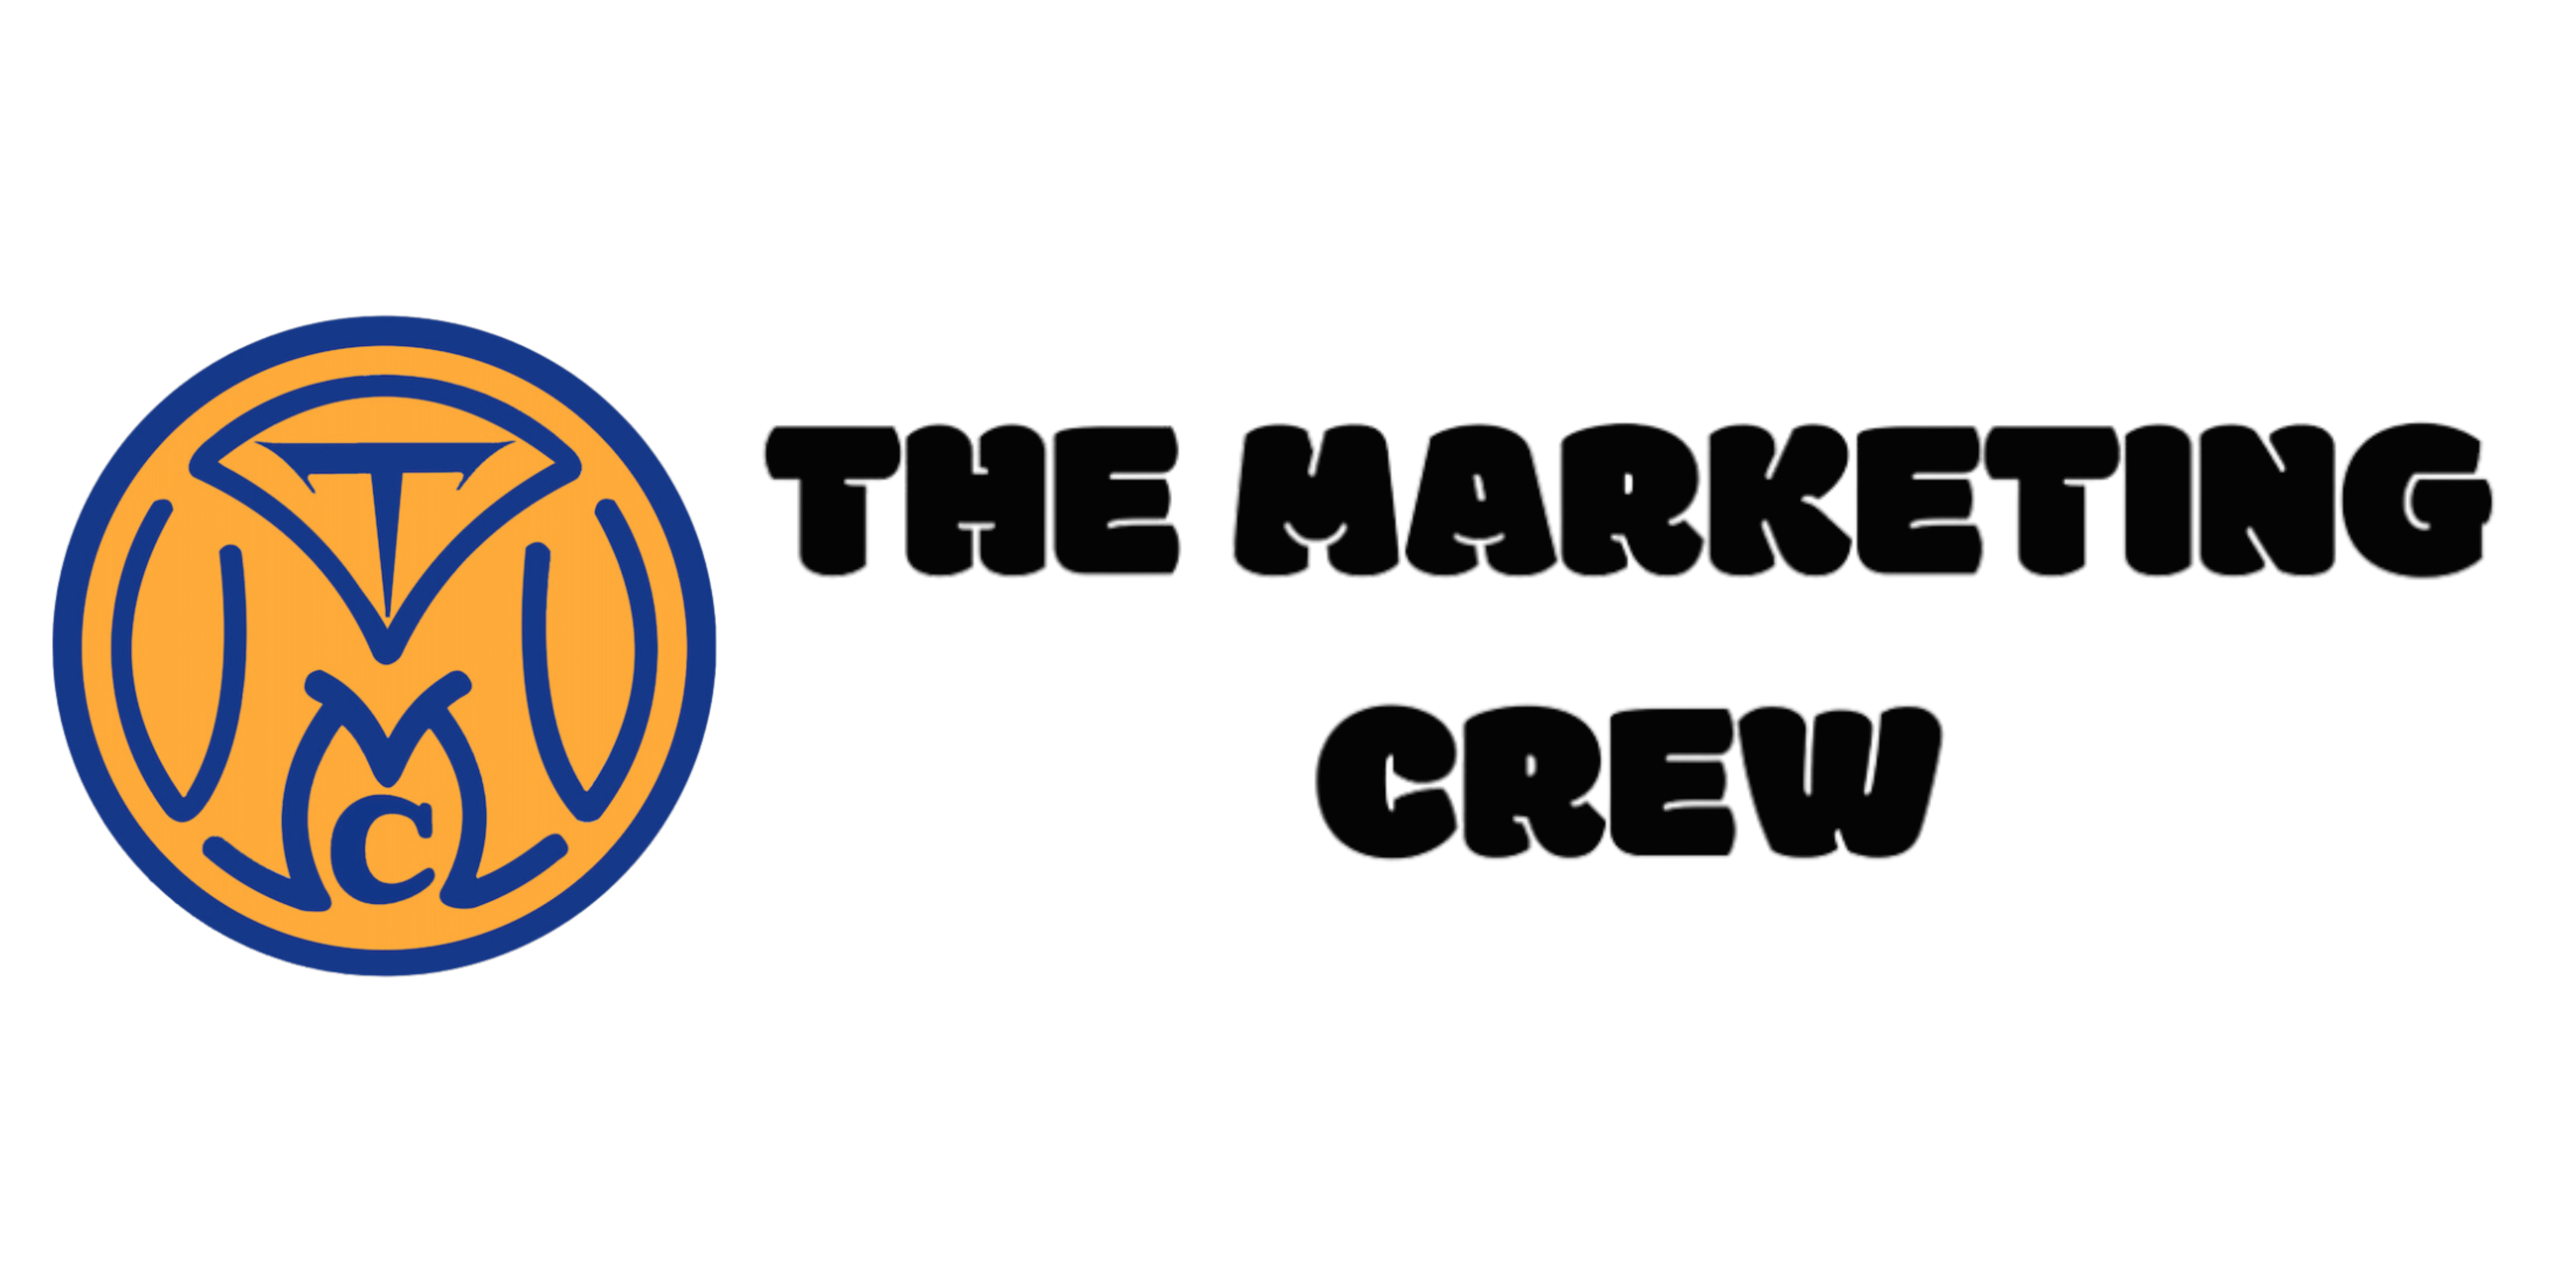 Marketing Crew LLC Digital Marketing Logo